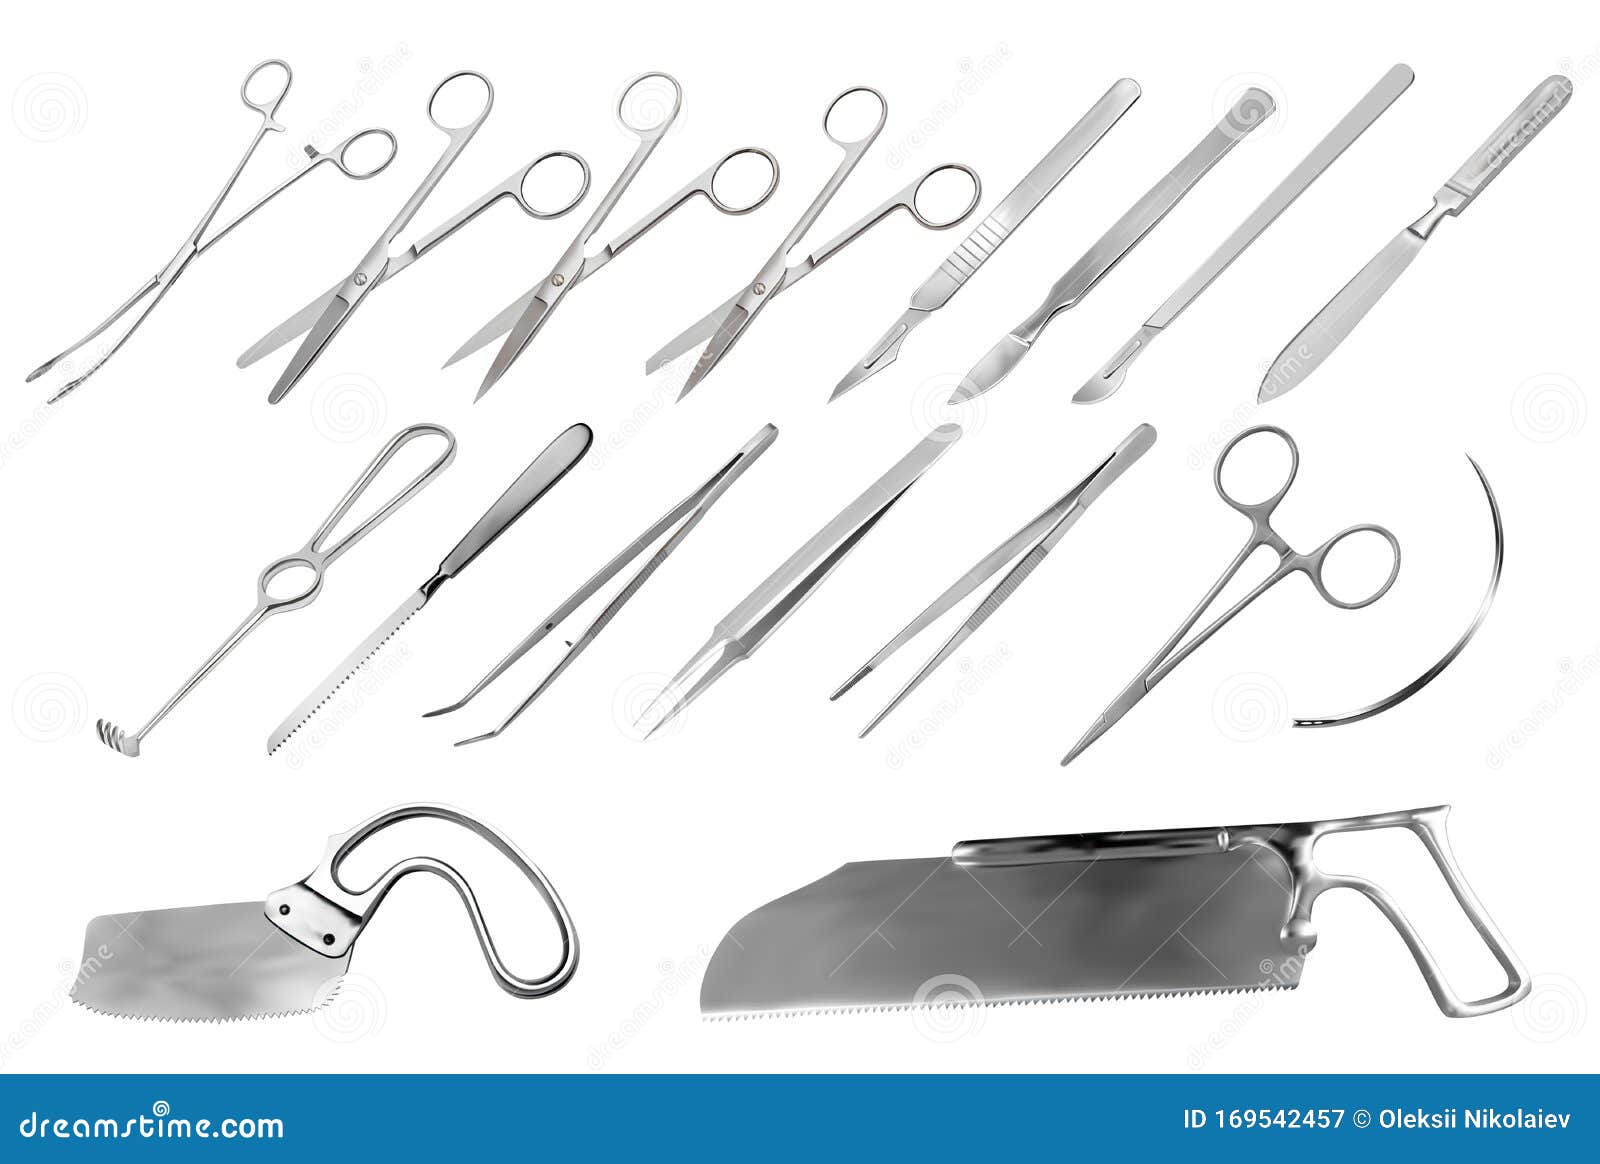 A Set of Surgical Instruments. Tweezers, Scalpels, Liston S Amputation ...